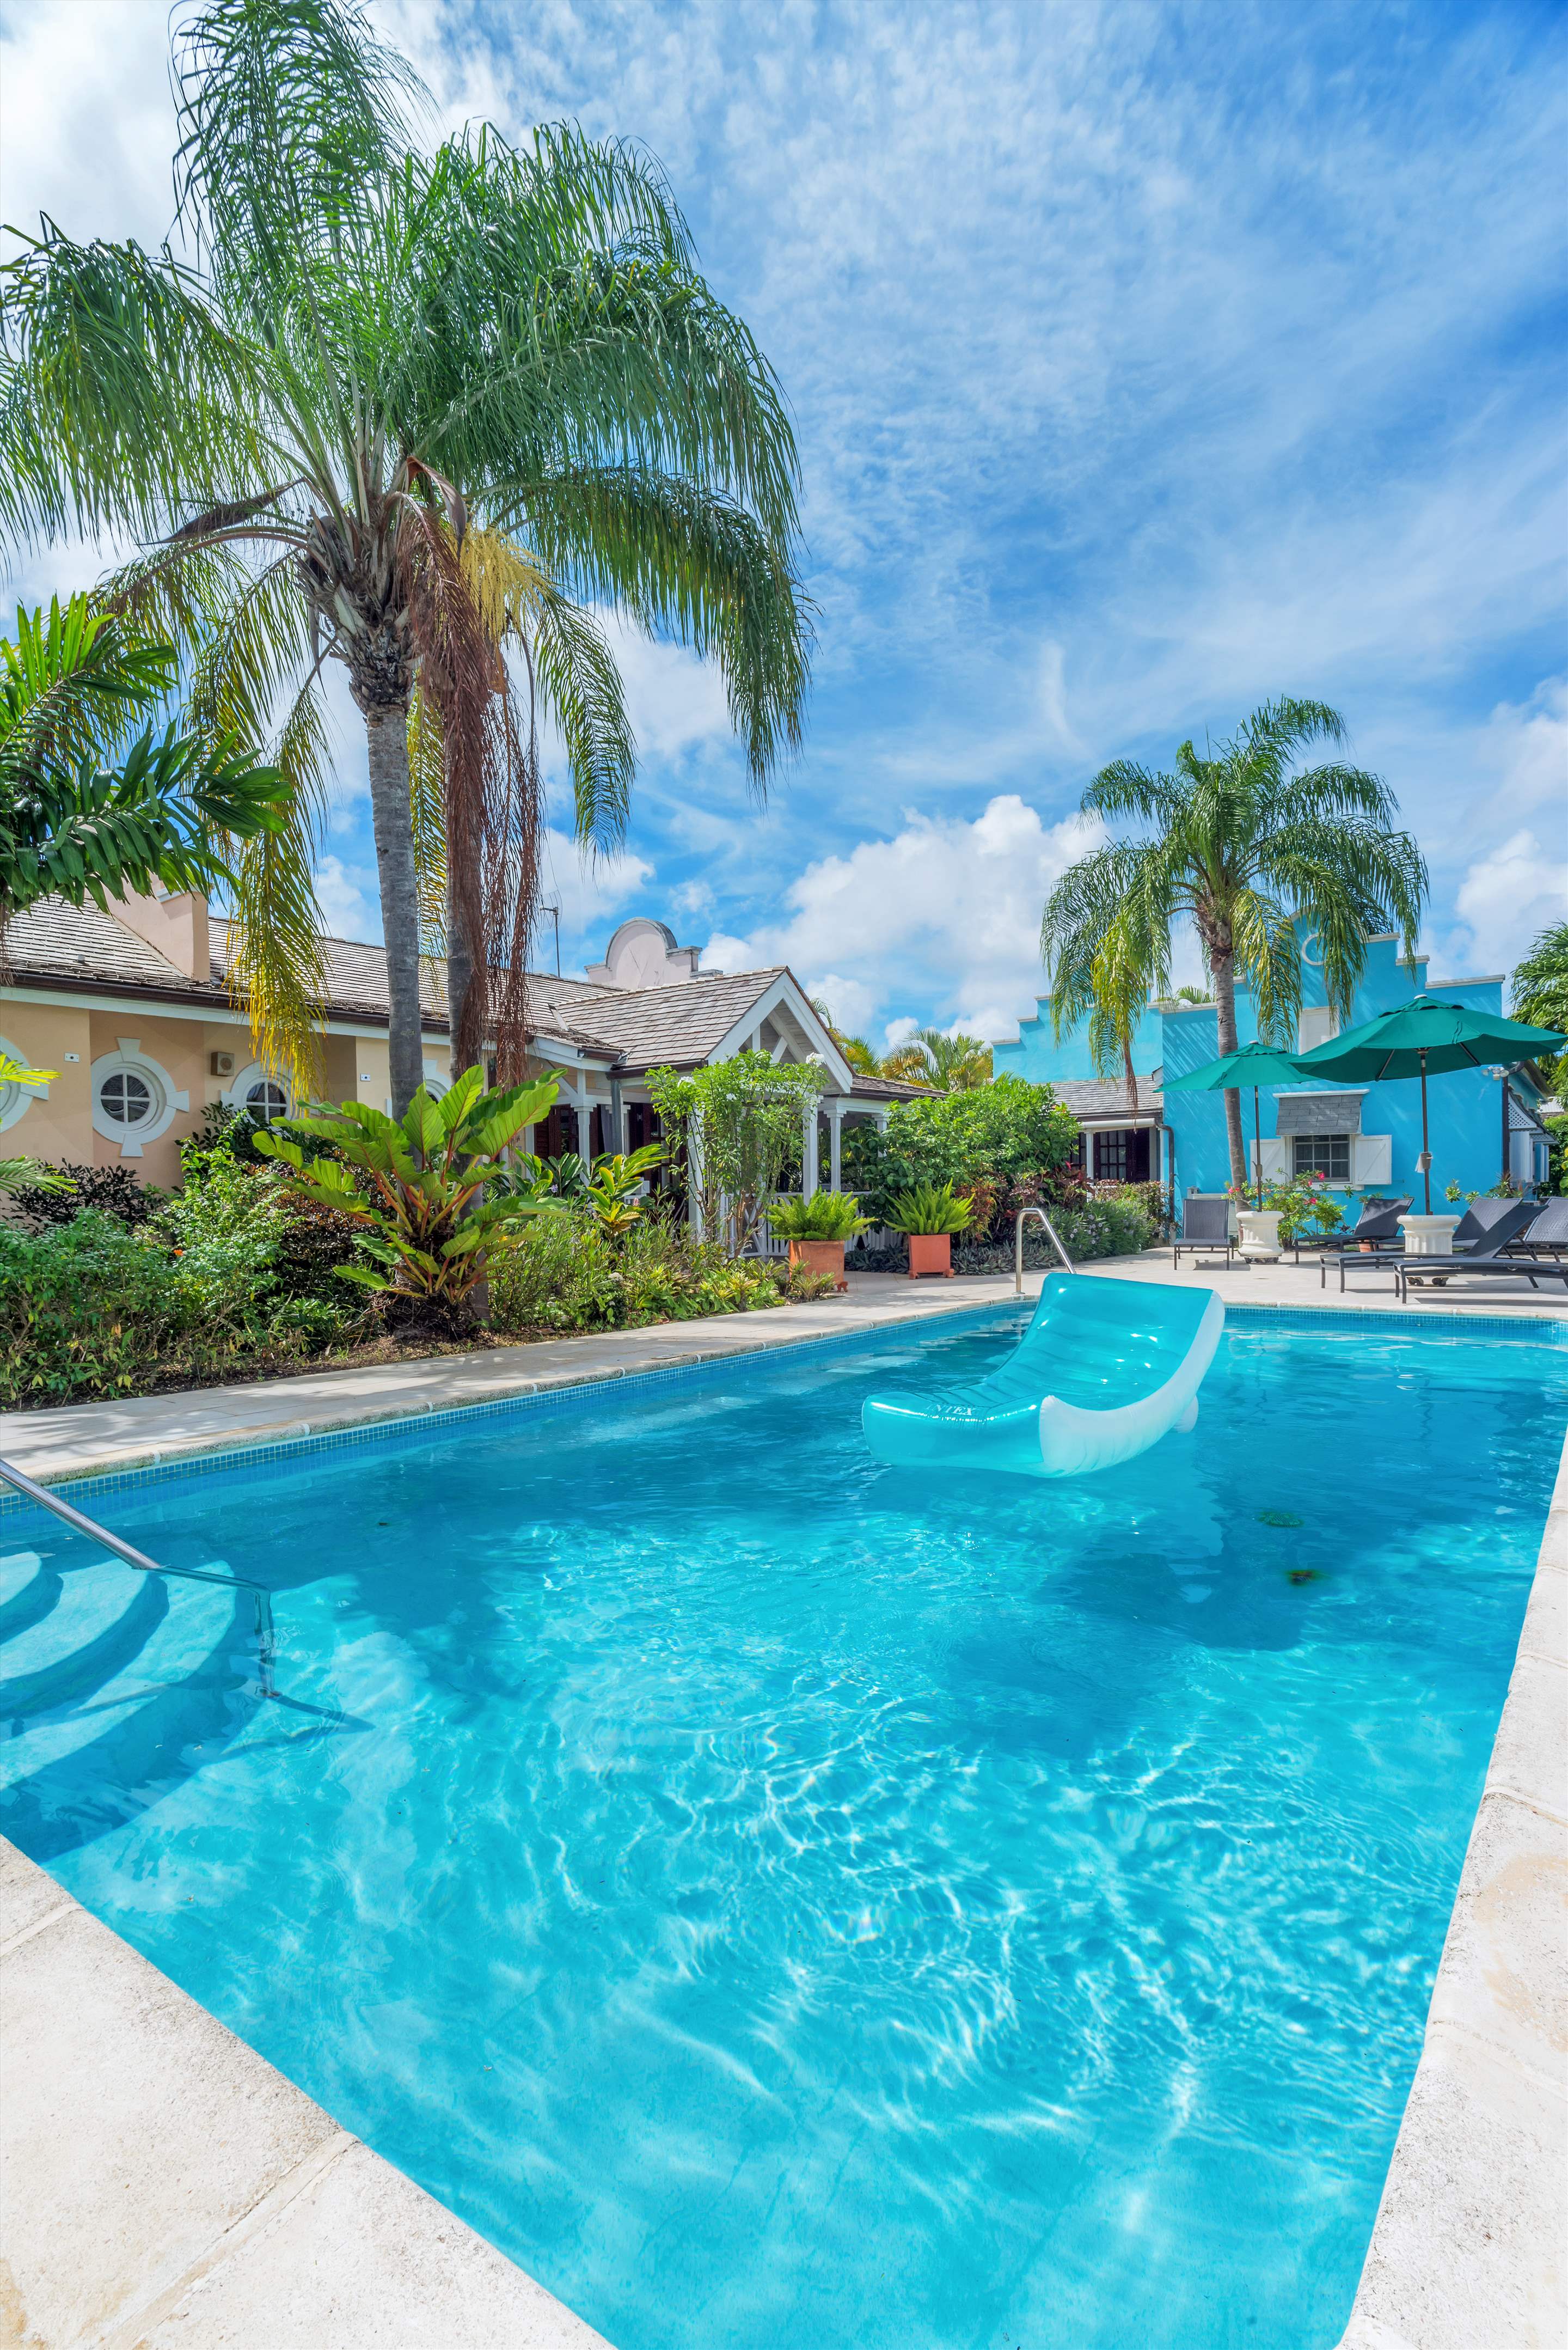 Porters Court 3, 2 bedroom, 2 bedroom villa in St. James & West Coast, Barbados